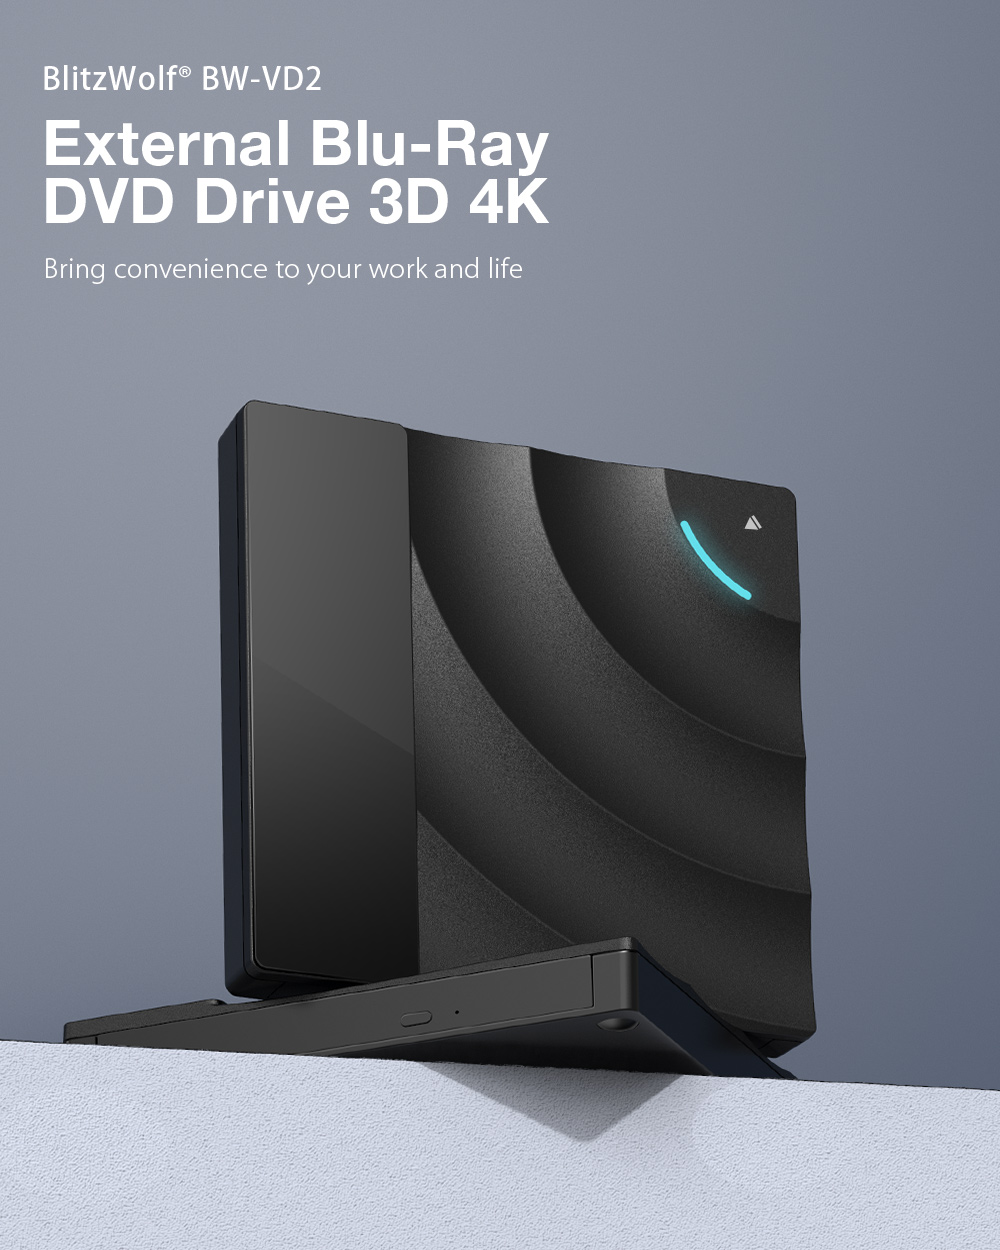 BlitzWolfreg-BW-VD2-External-Blu-Ray-DVD-Drive-3D-4K-Player-USB30-Type-C-Ports-Optical-Drives-for-WI-1833013-1